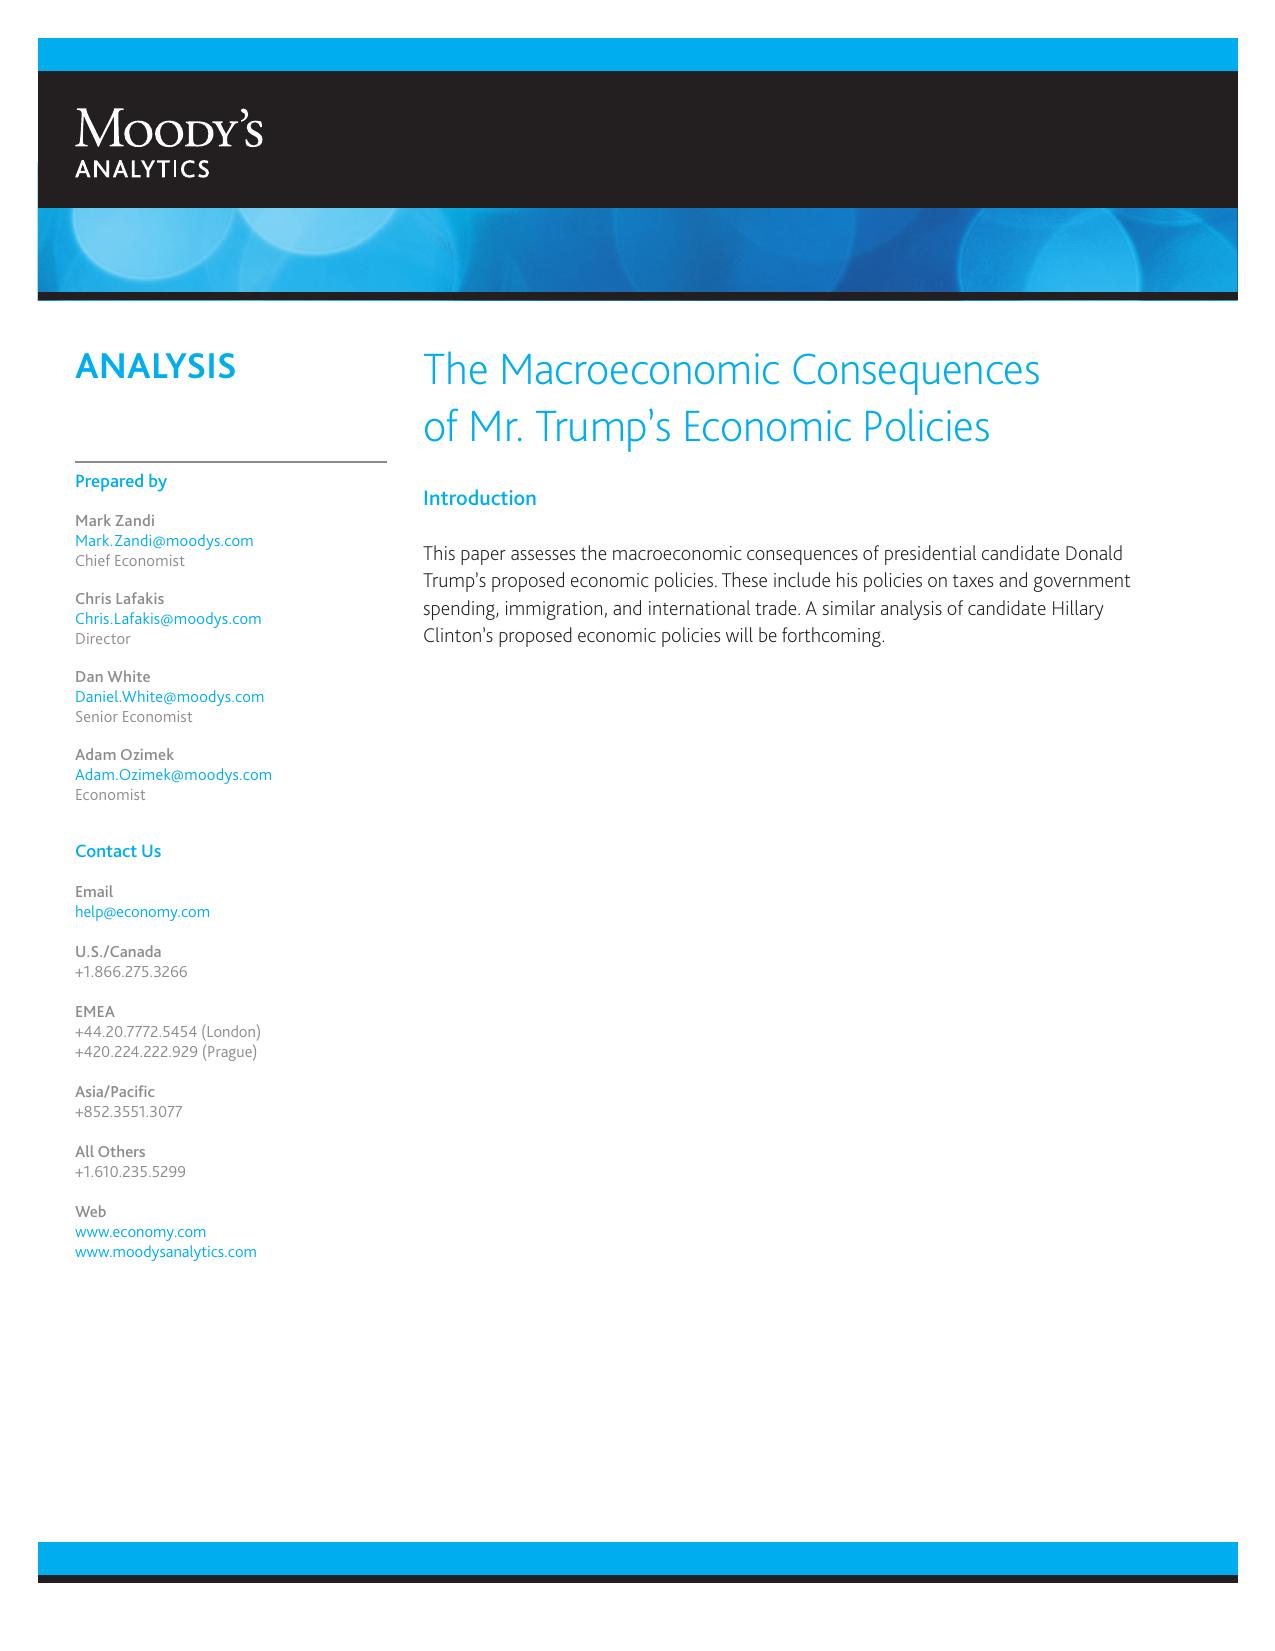 The Macroeconomic Consequences of Mr. Trump's Economic Policies, Moody's Analytics White Paper